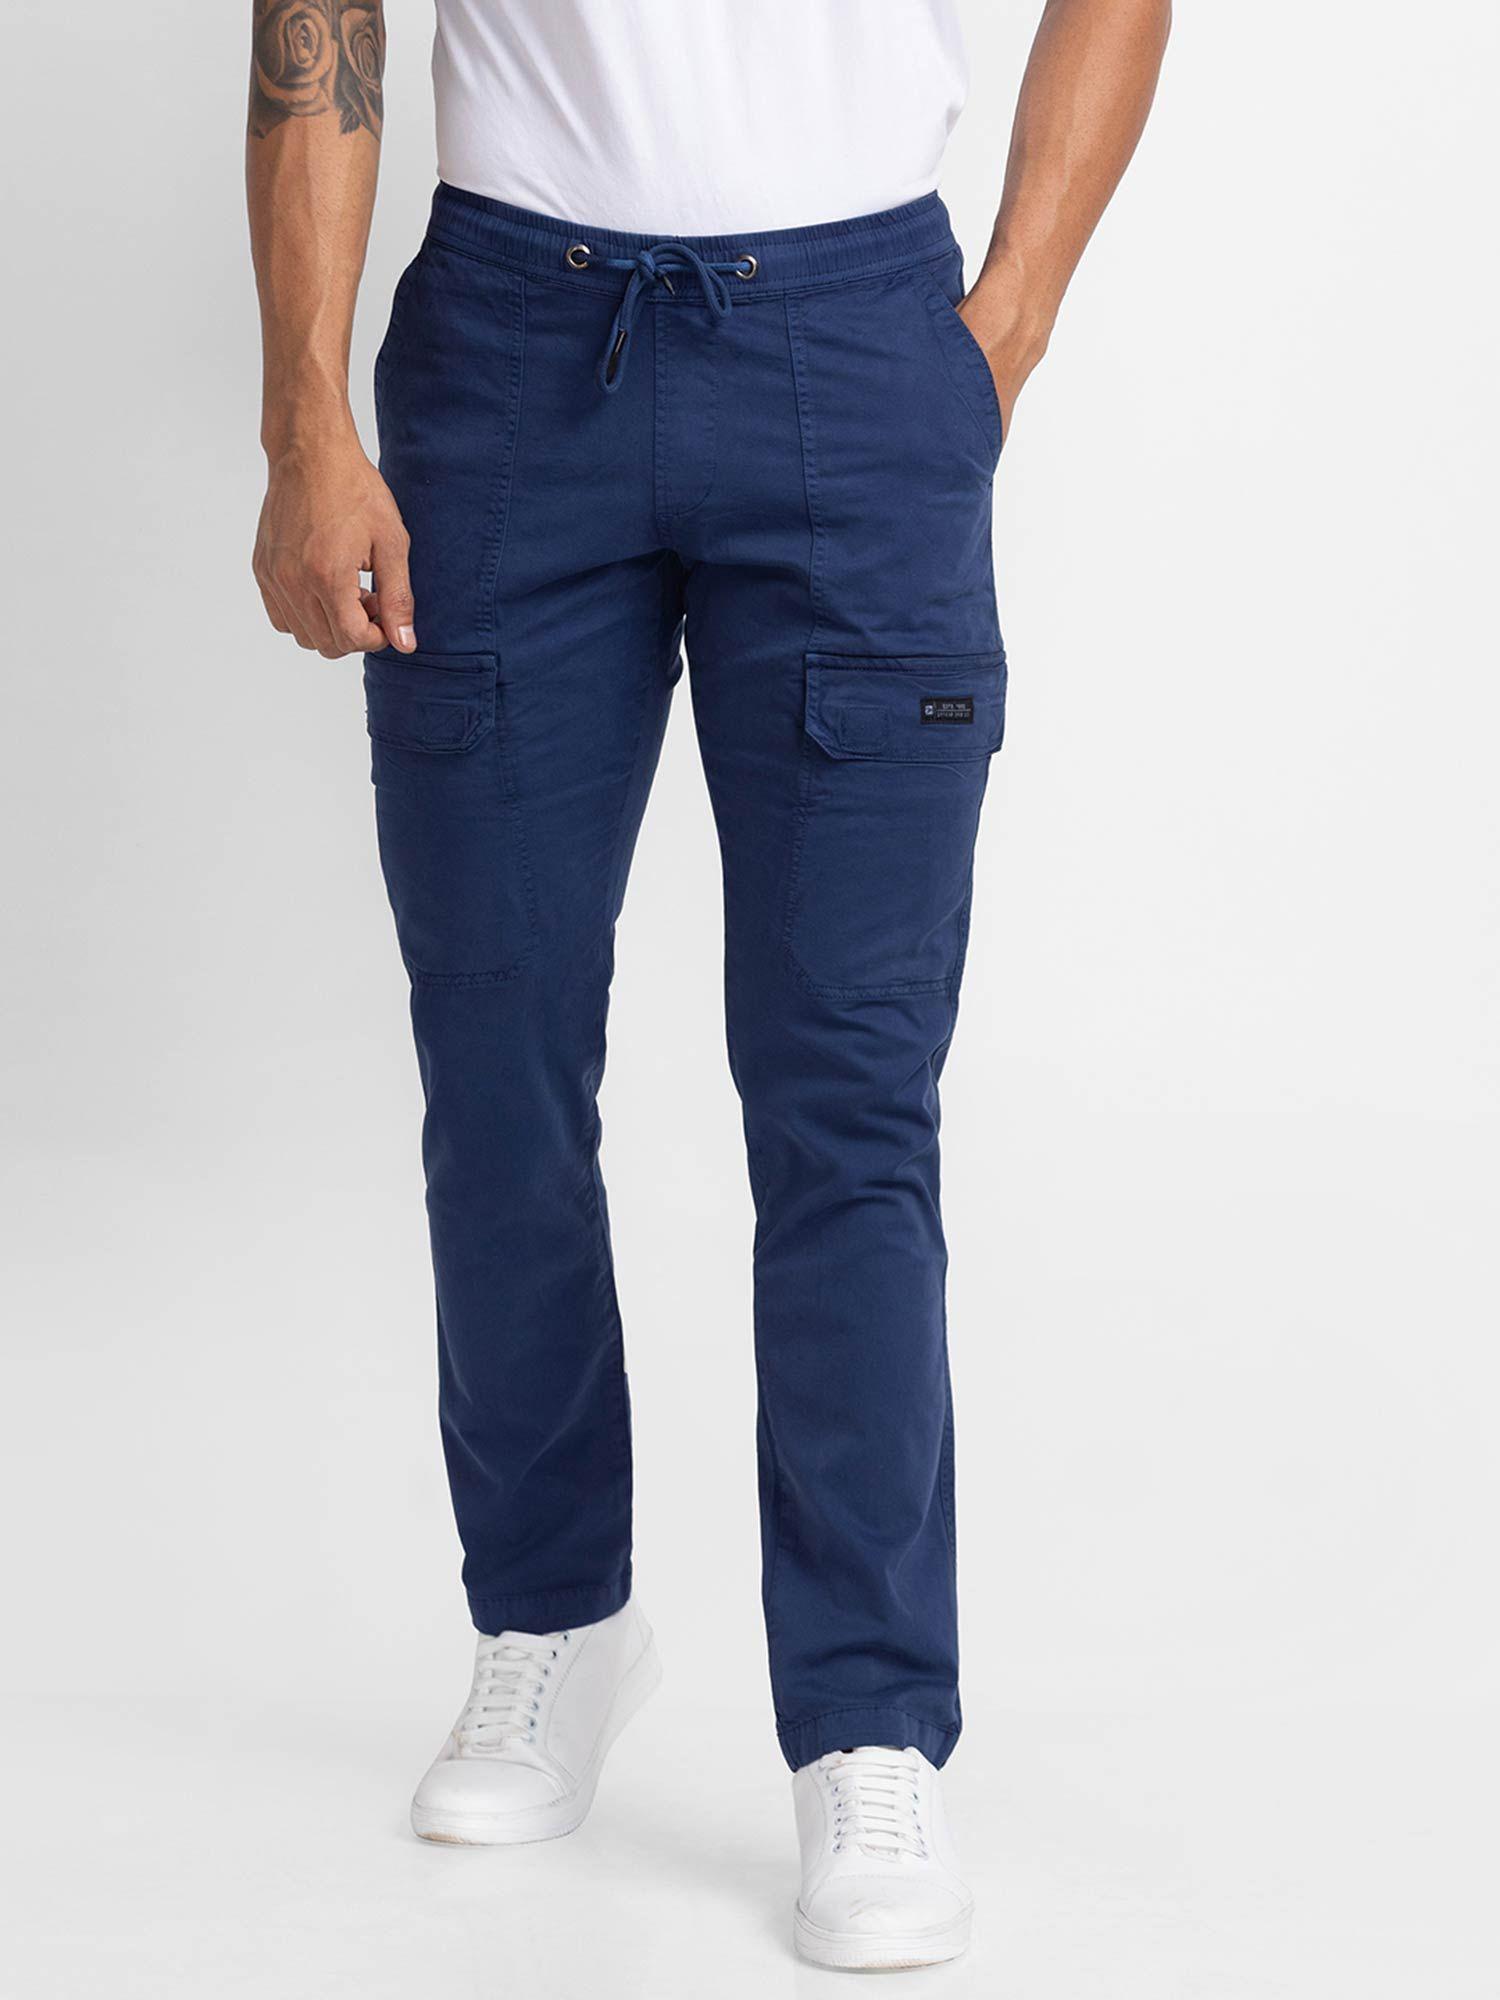 navy blue cotton slim fit regular length trousers for men